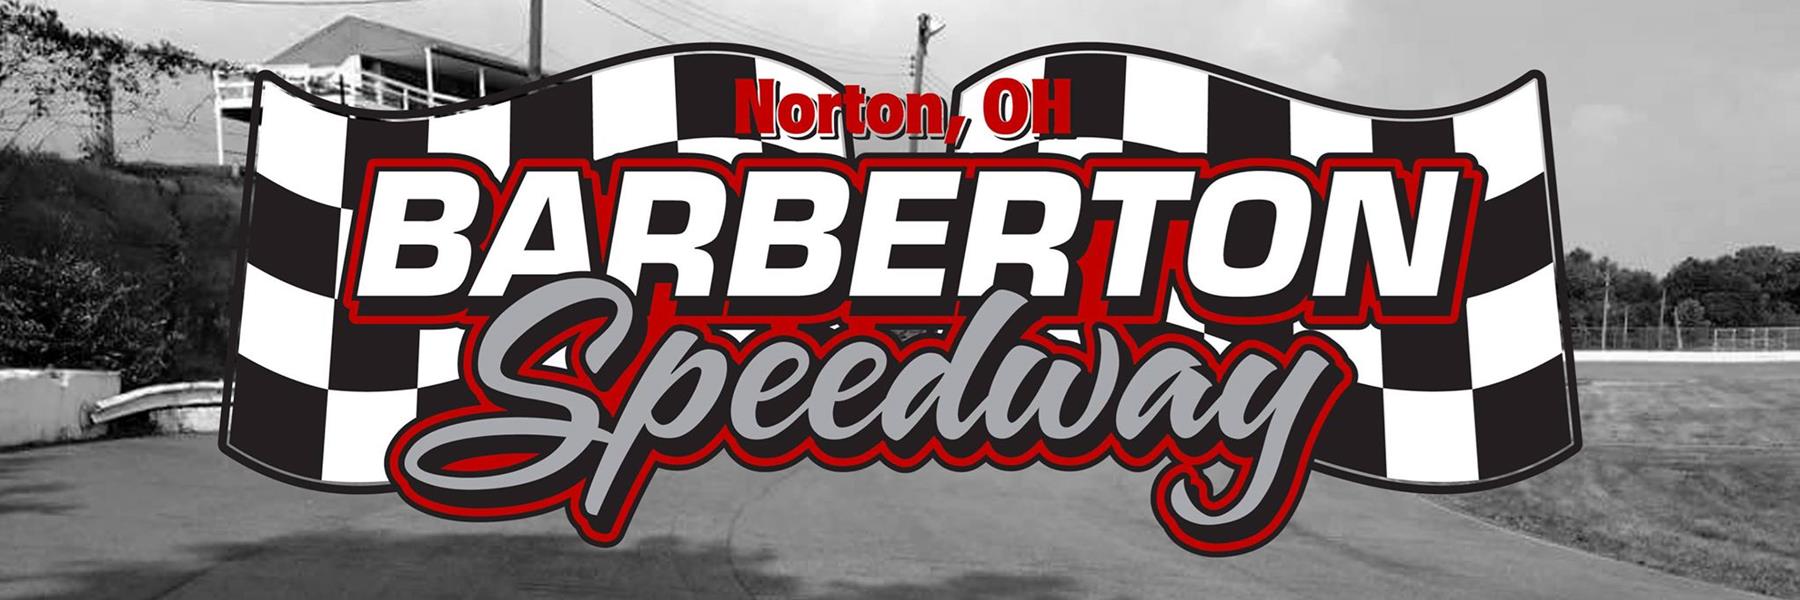 9/18/2021 - Barberton Speedway